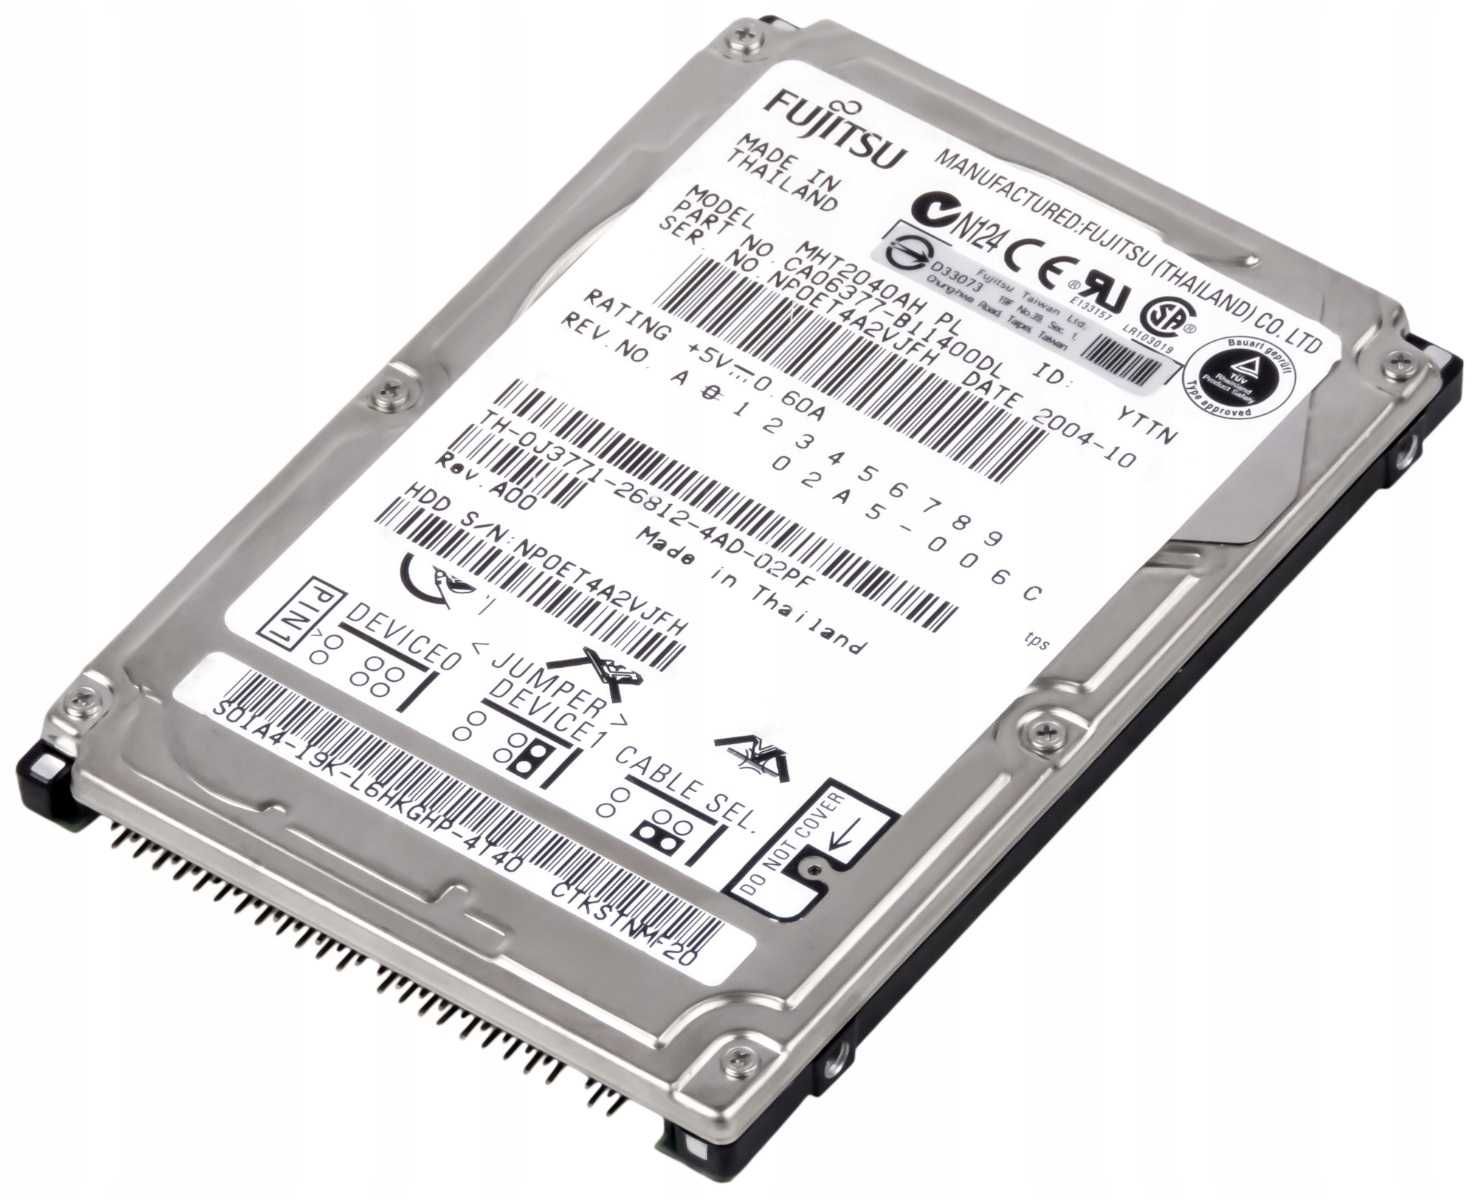 Dysk twardy Fujitsu MHT2040AH 40GB PATA (IDE/ATA) 2,5"